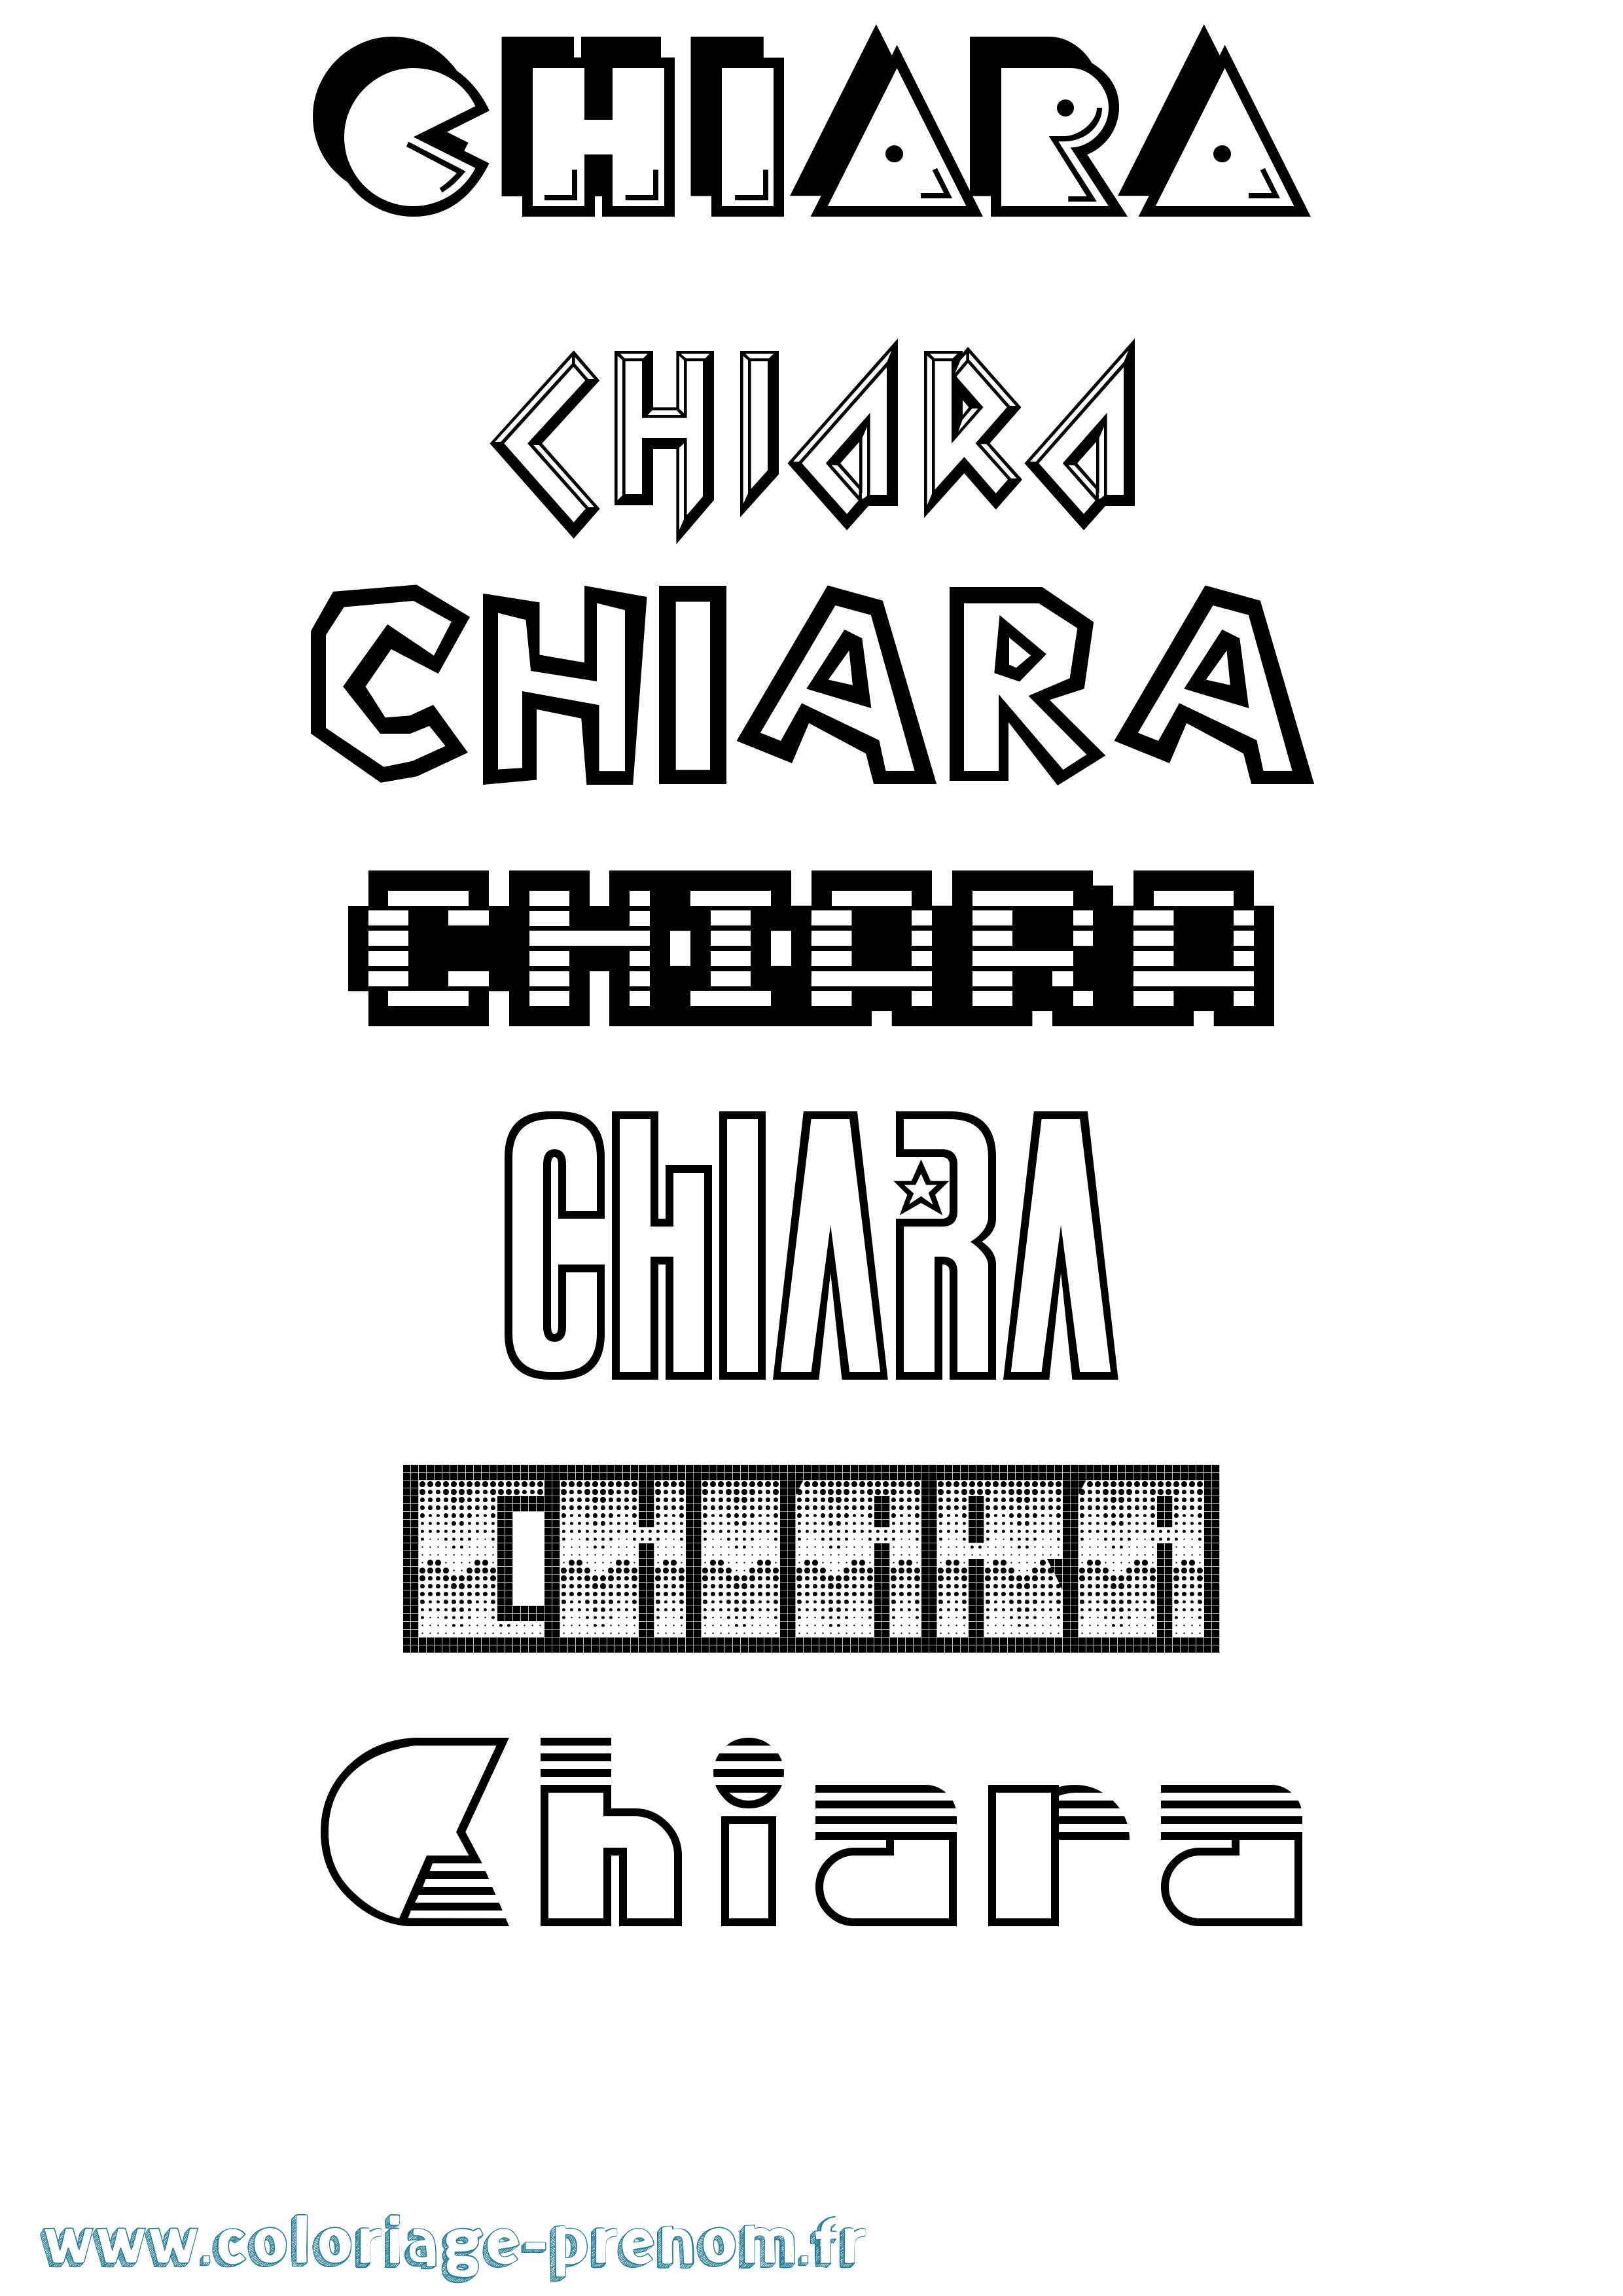 Coloriage prénom Chiara